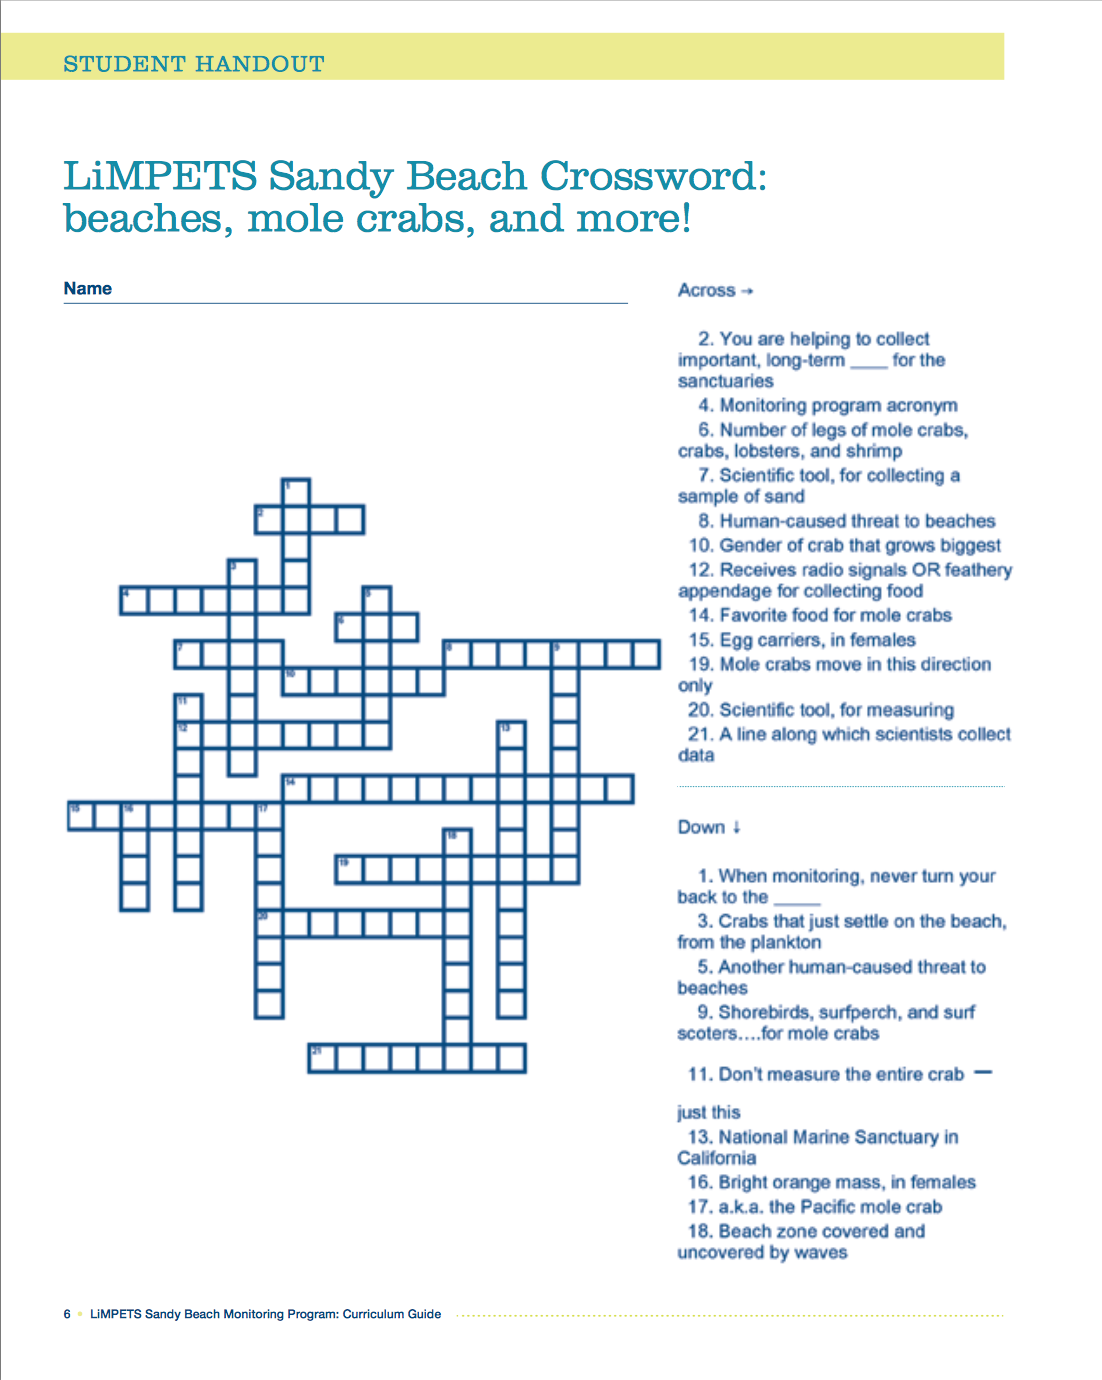 SBM Crossword LiMPETS